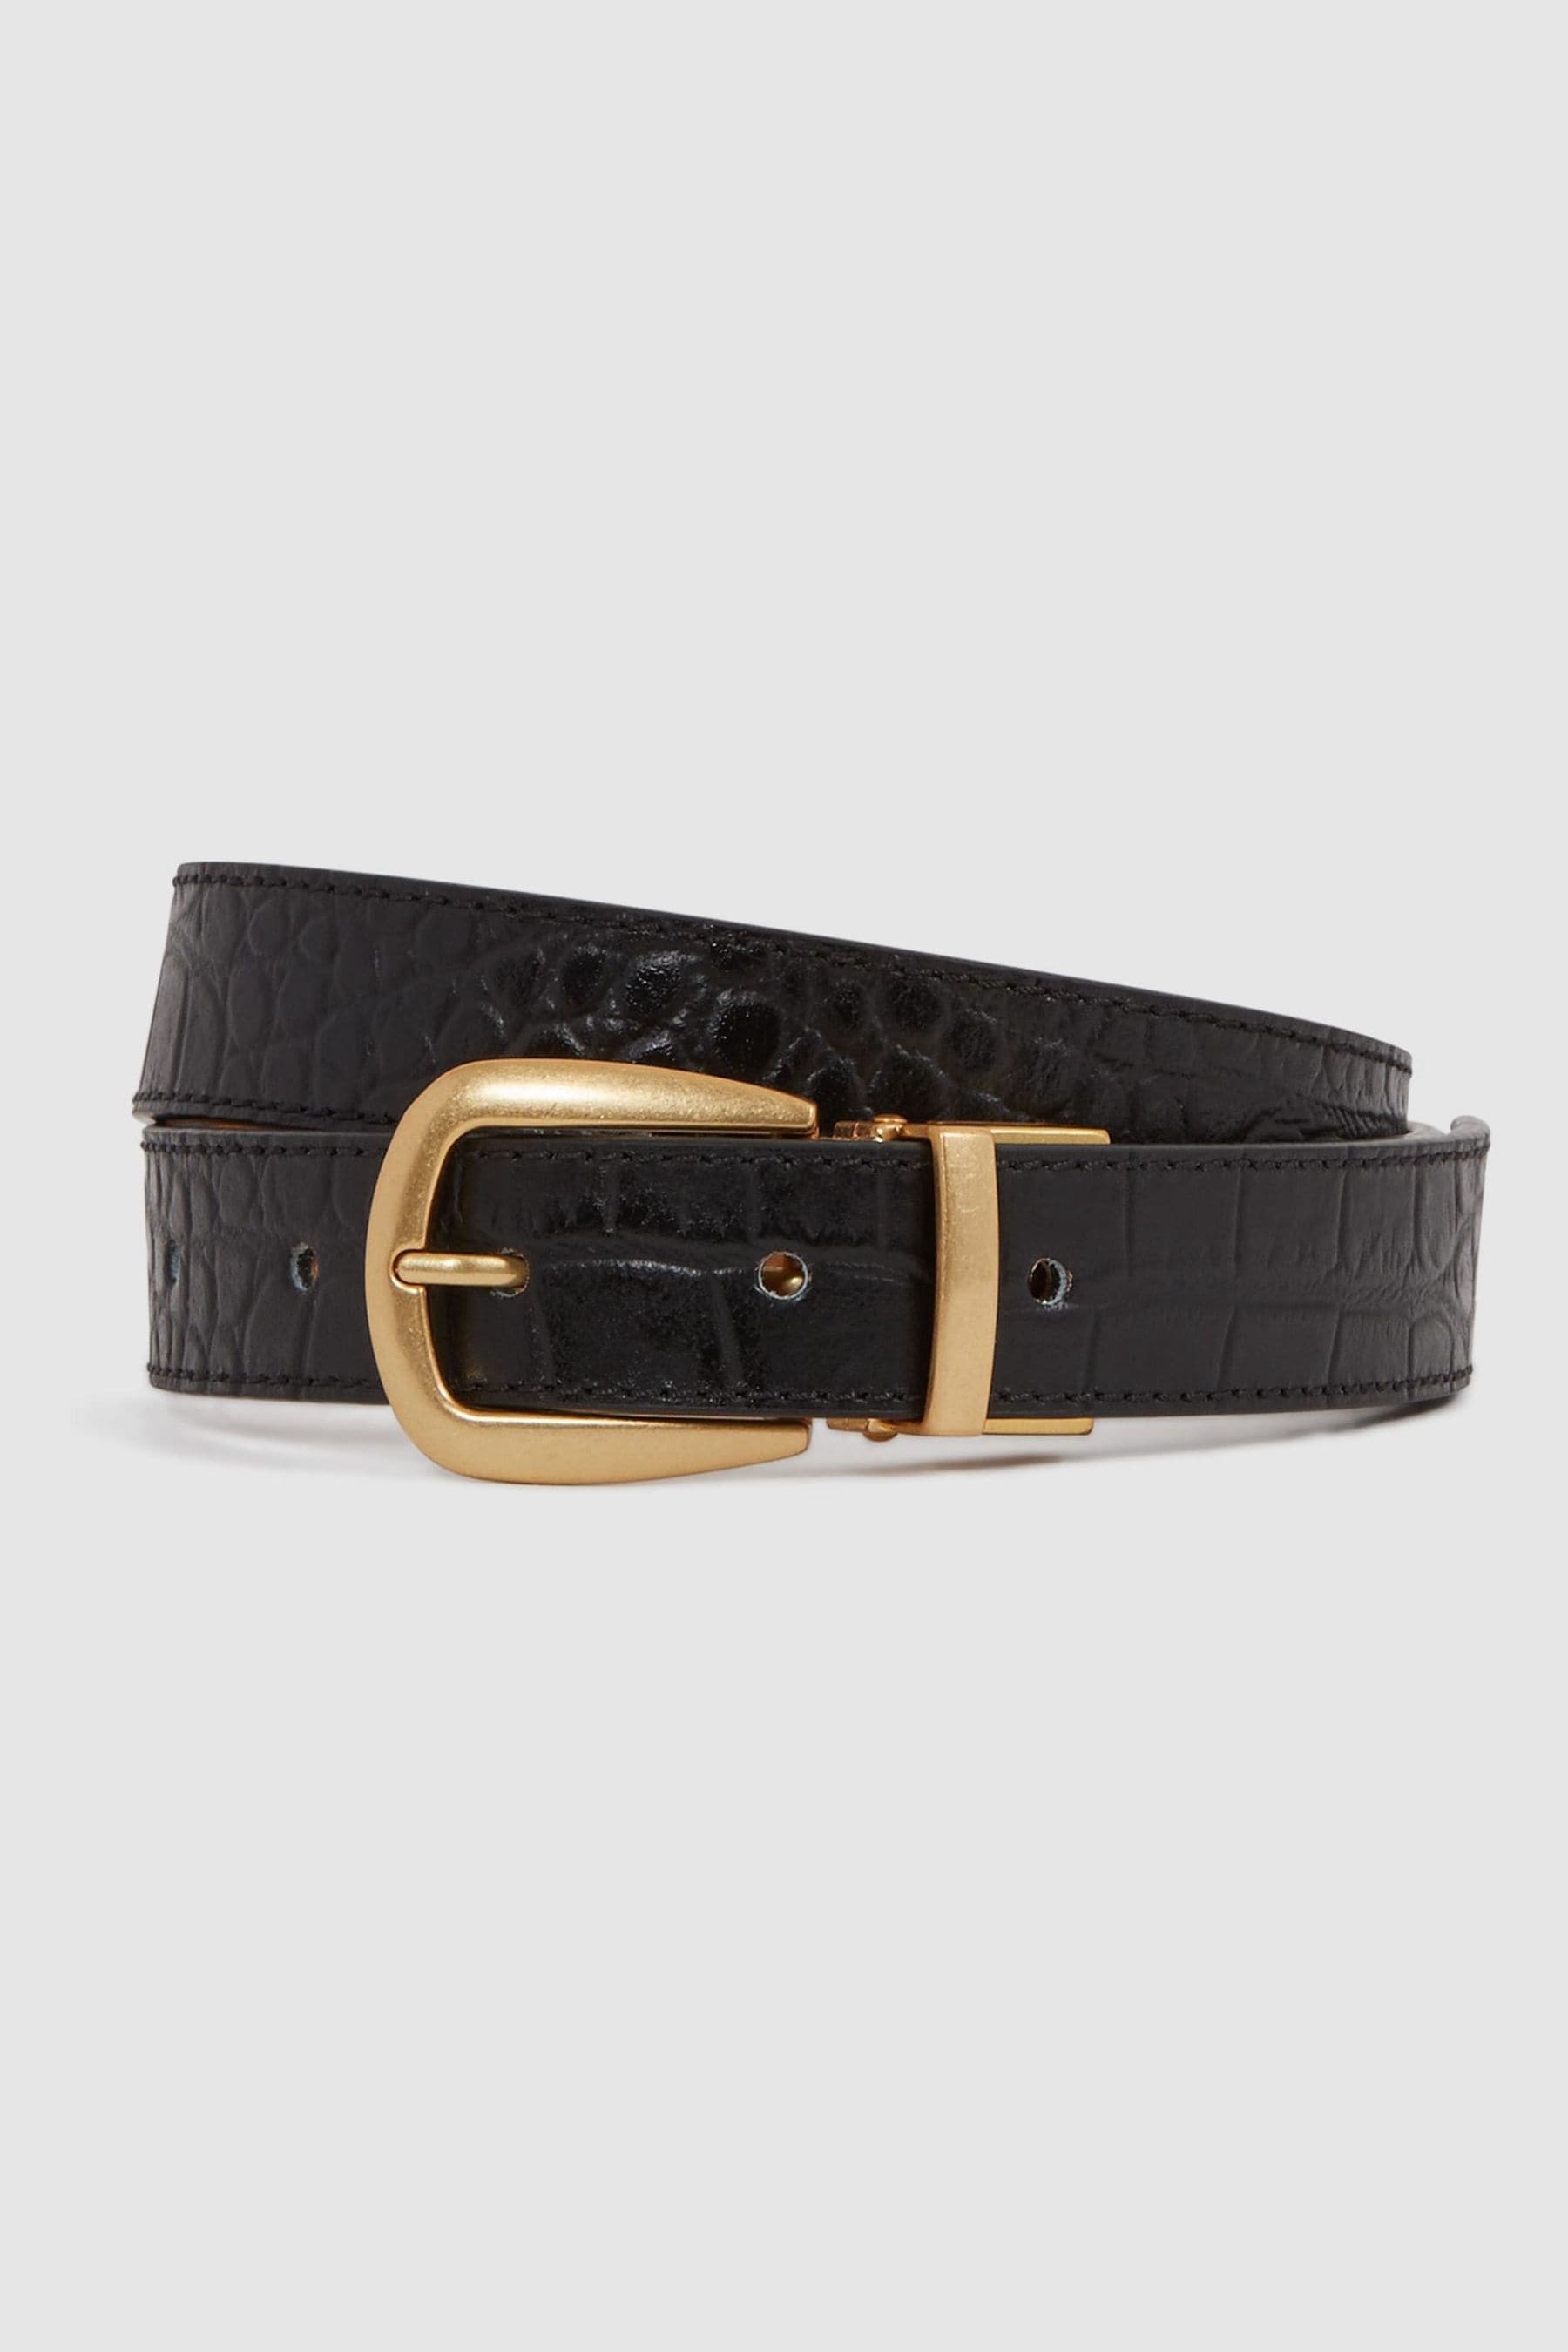 Reiss Madison - Black/camel Madison Reversible Leather Belt, S